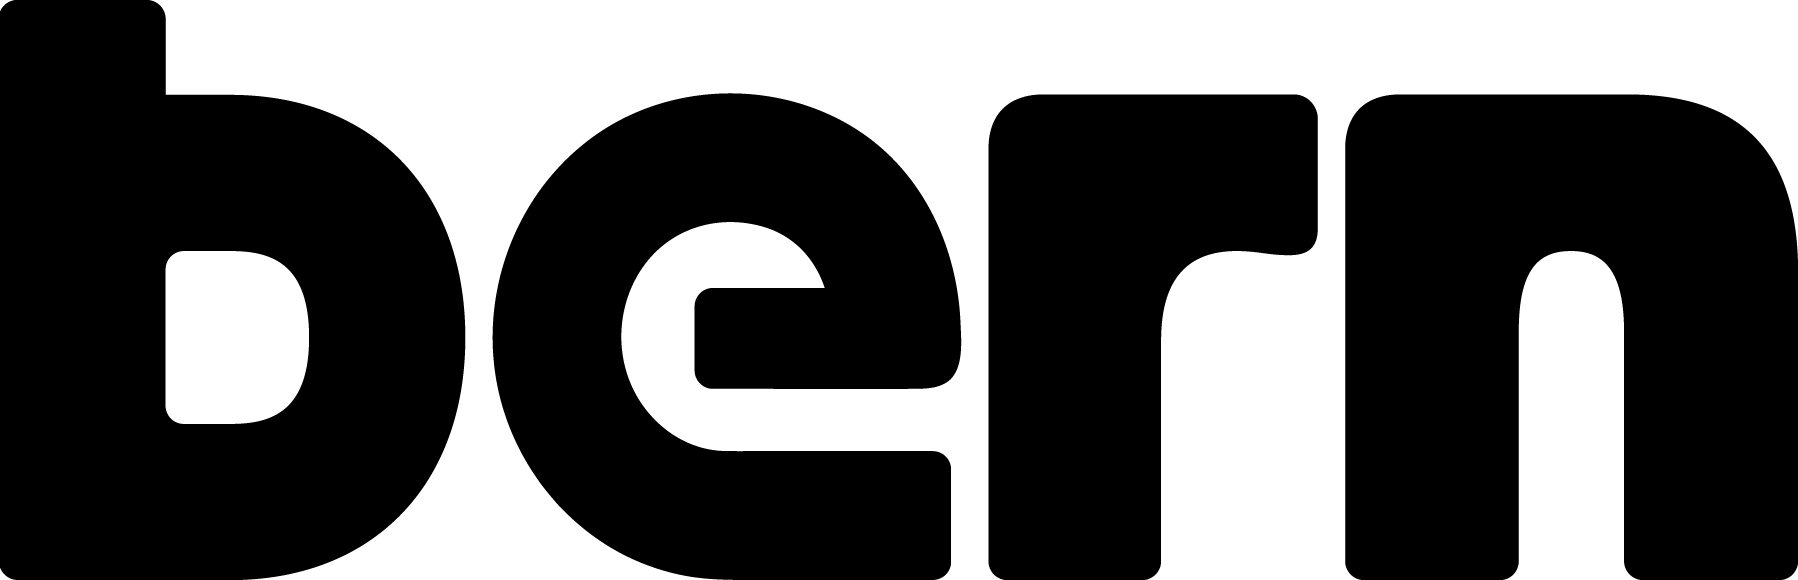 Bern-Logo.png